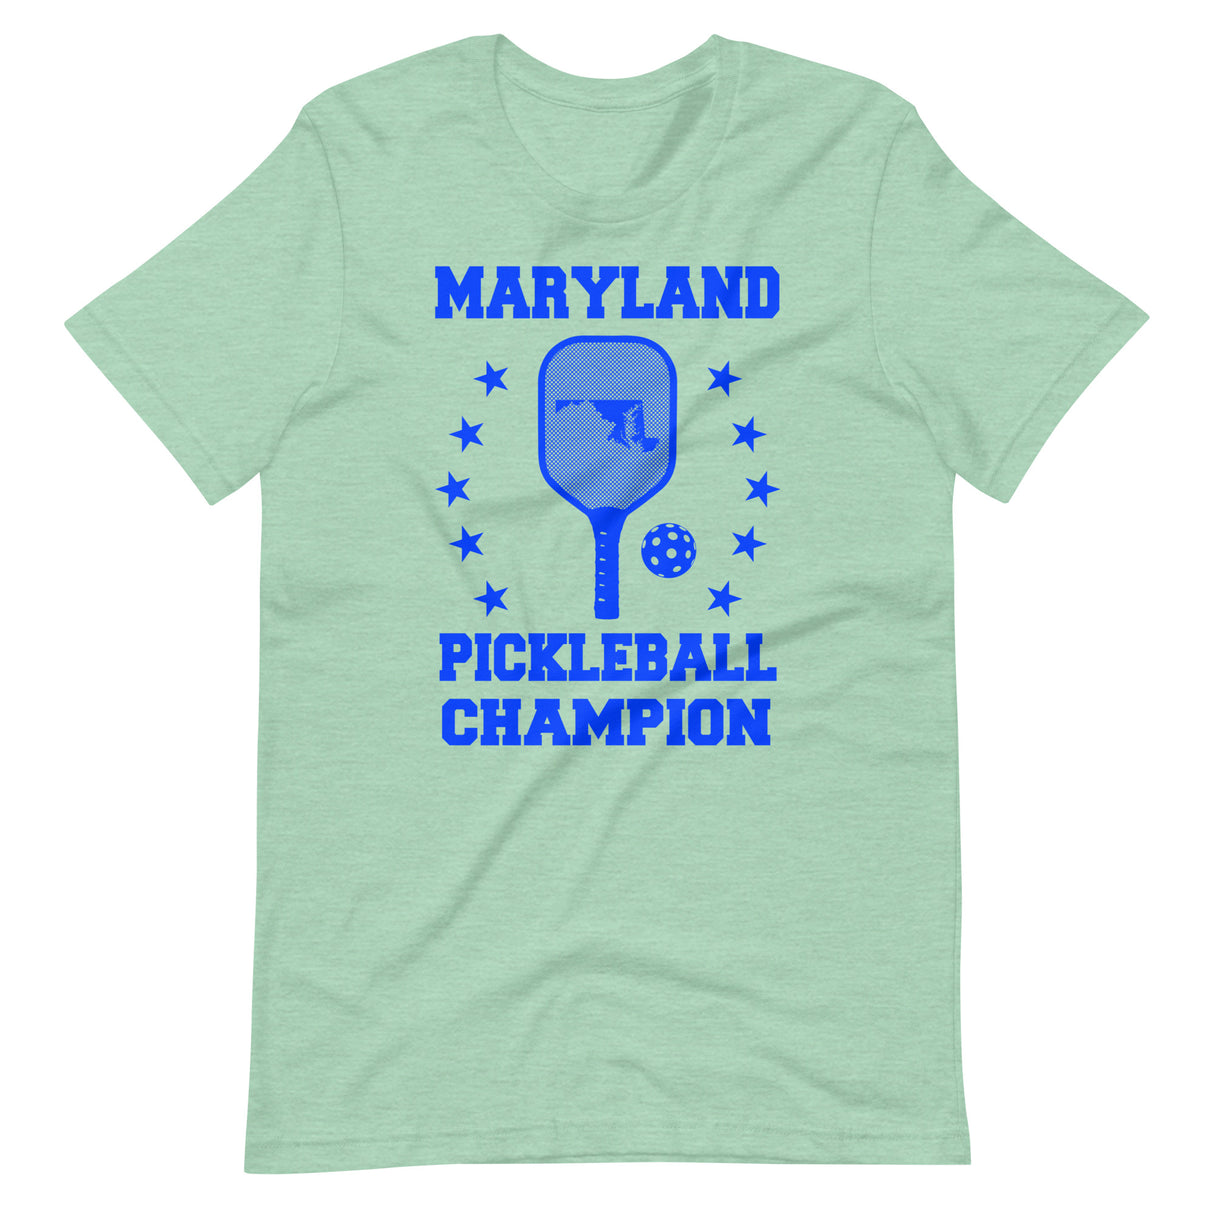 Maryland Pickleball Champion Shirt